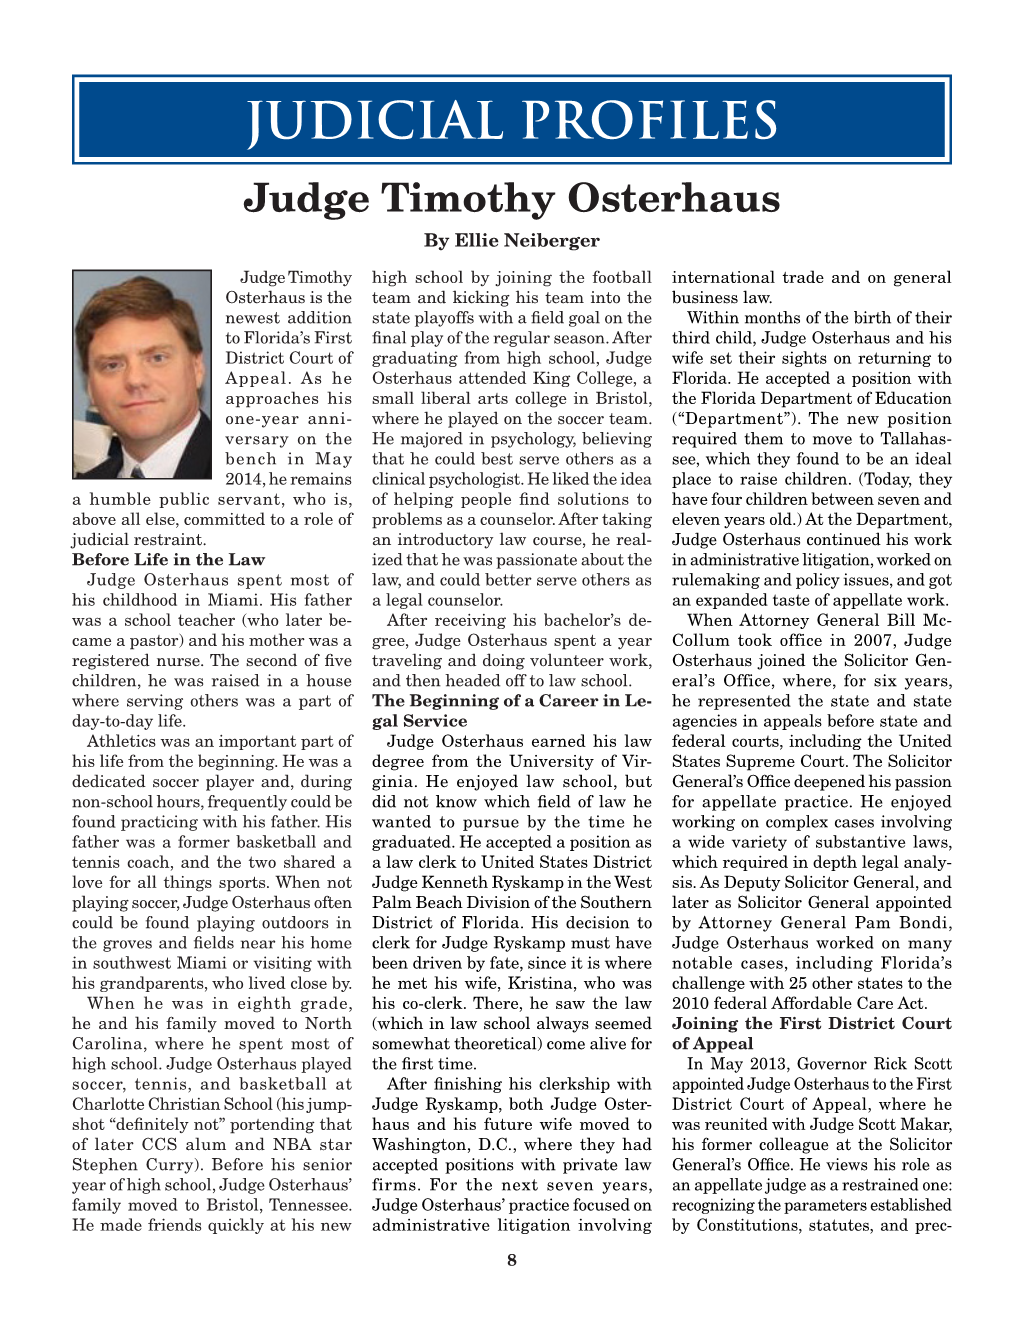 Judicial Profiles: Judge Timothy Osterhaus